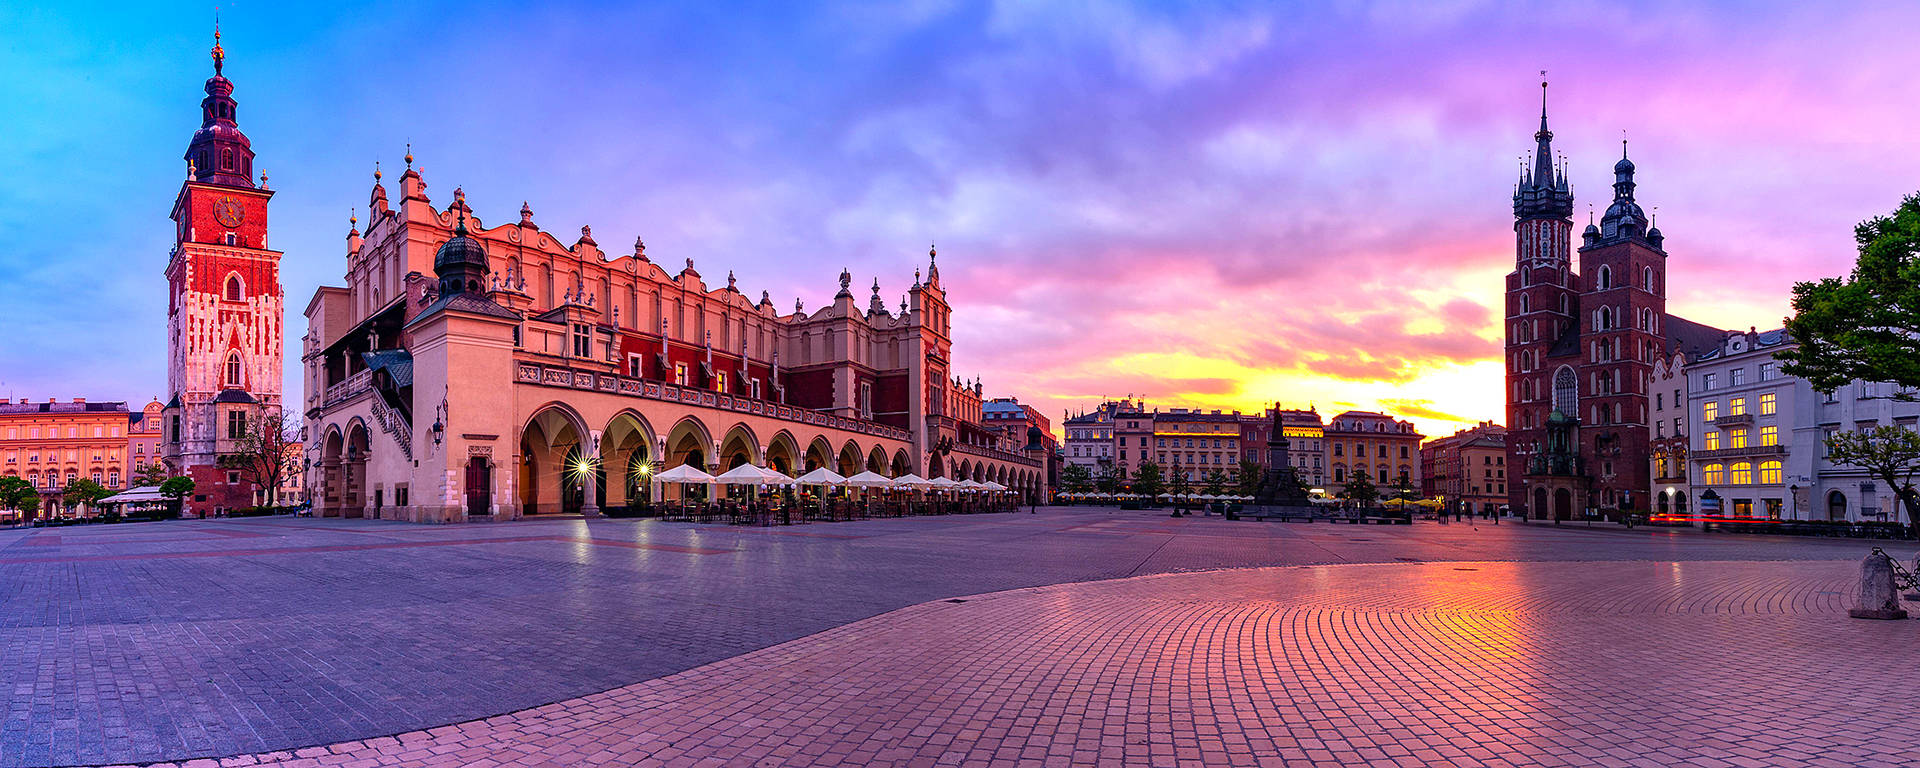 Empty Main Market Square, Krakow Poland On A Sunset Wallpaper